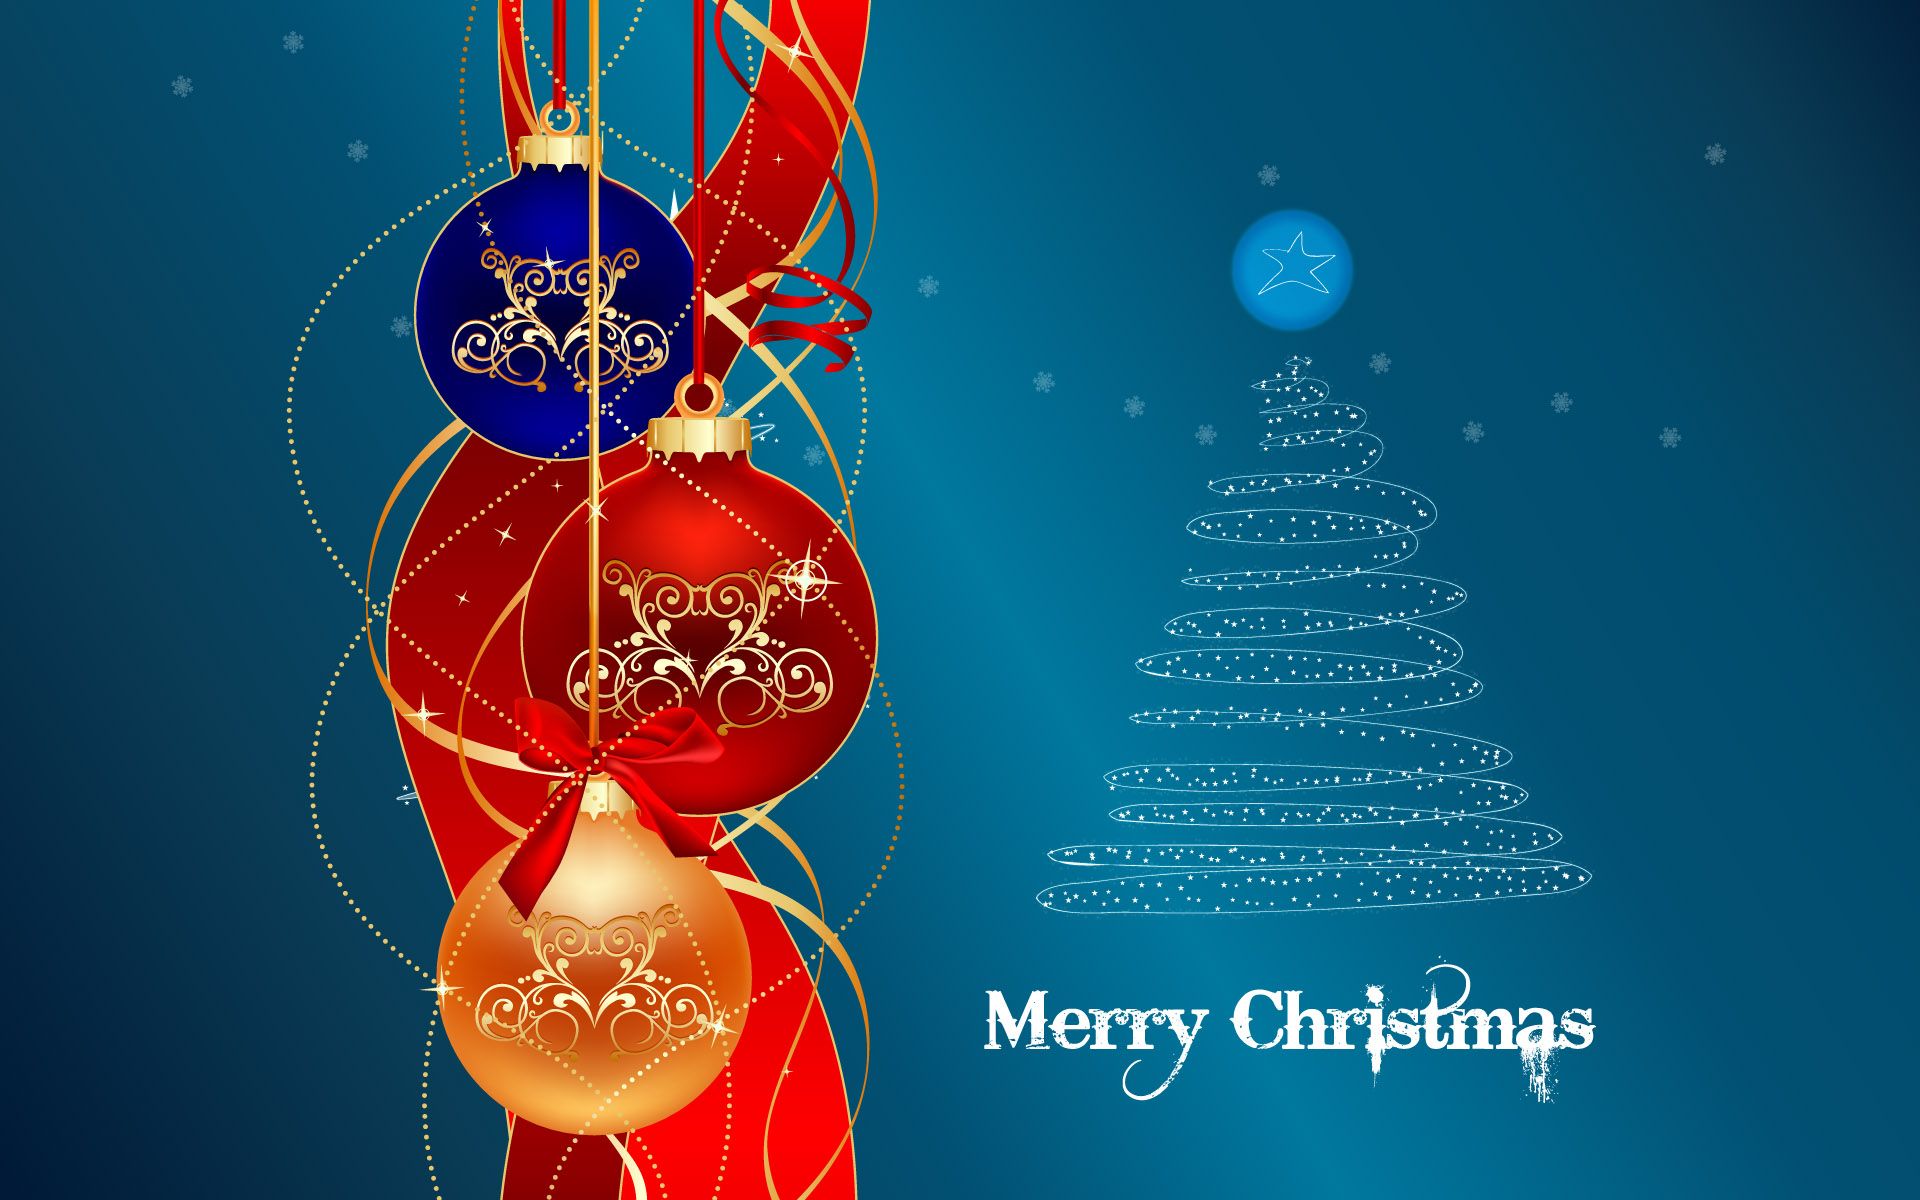 Merry Christmas Image High Resolution HD Wallpaper